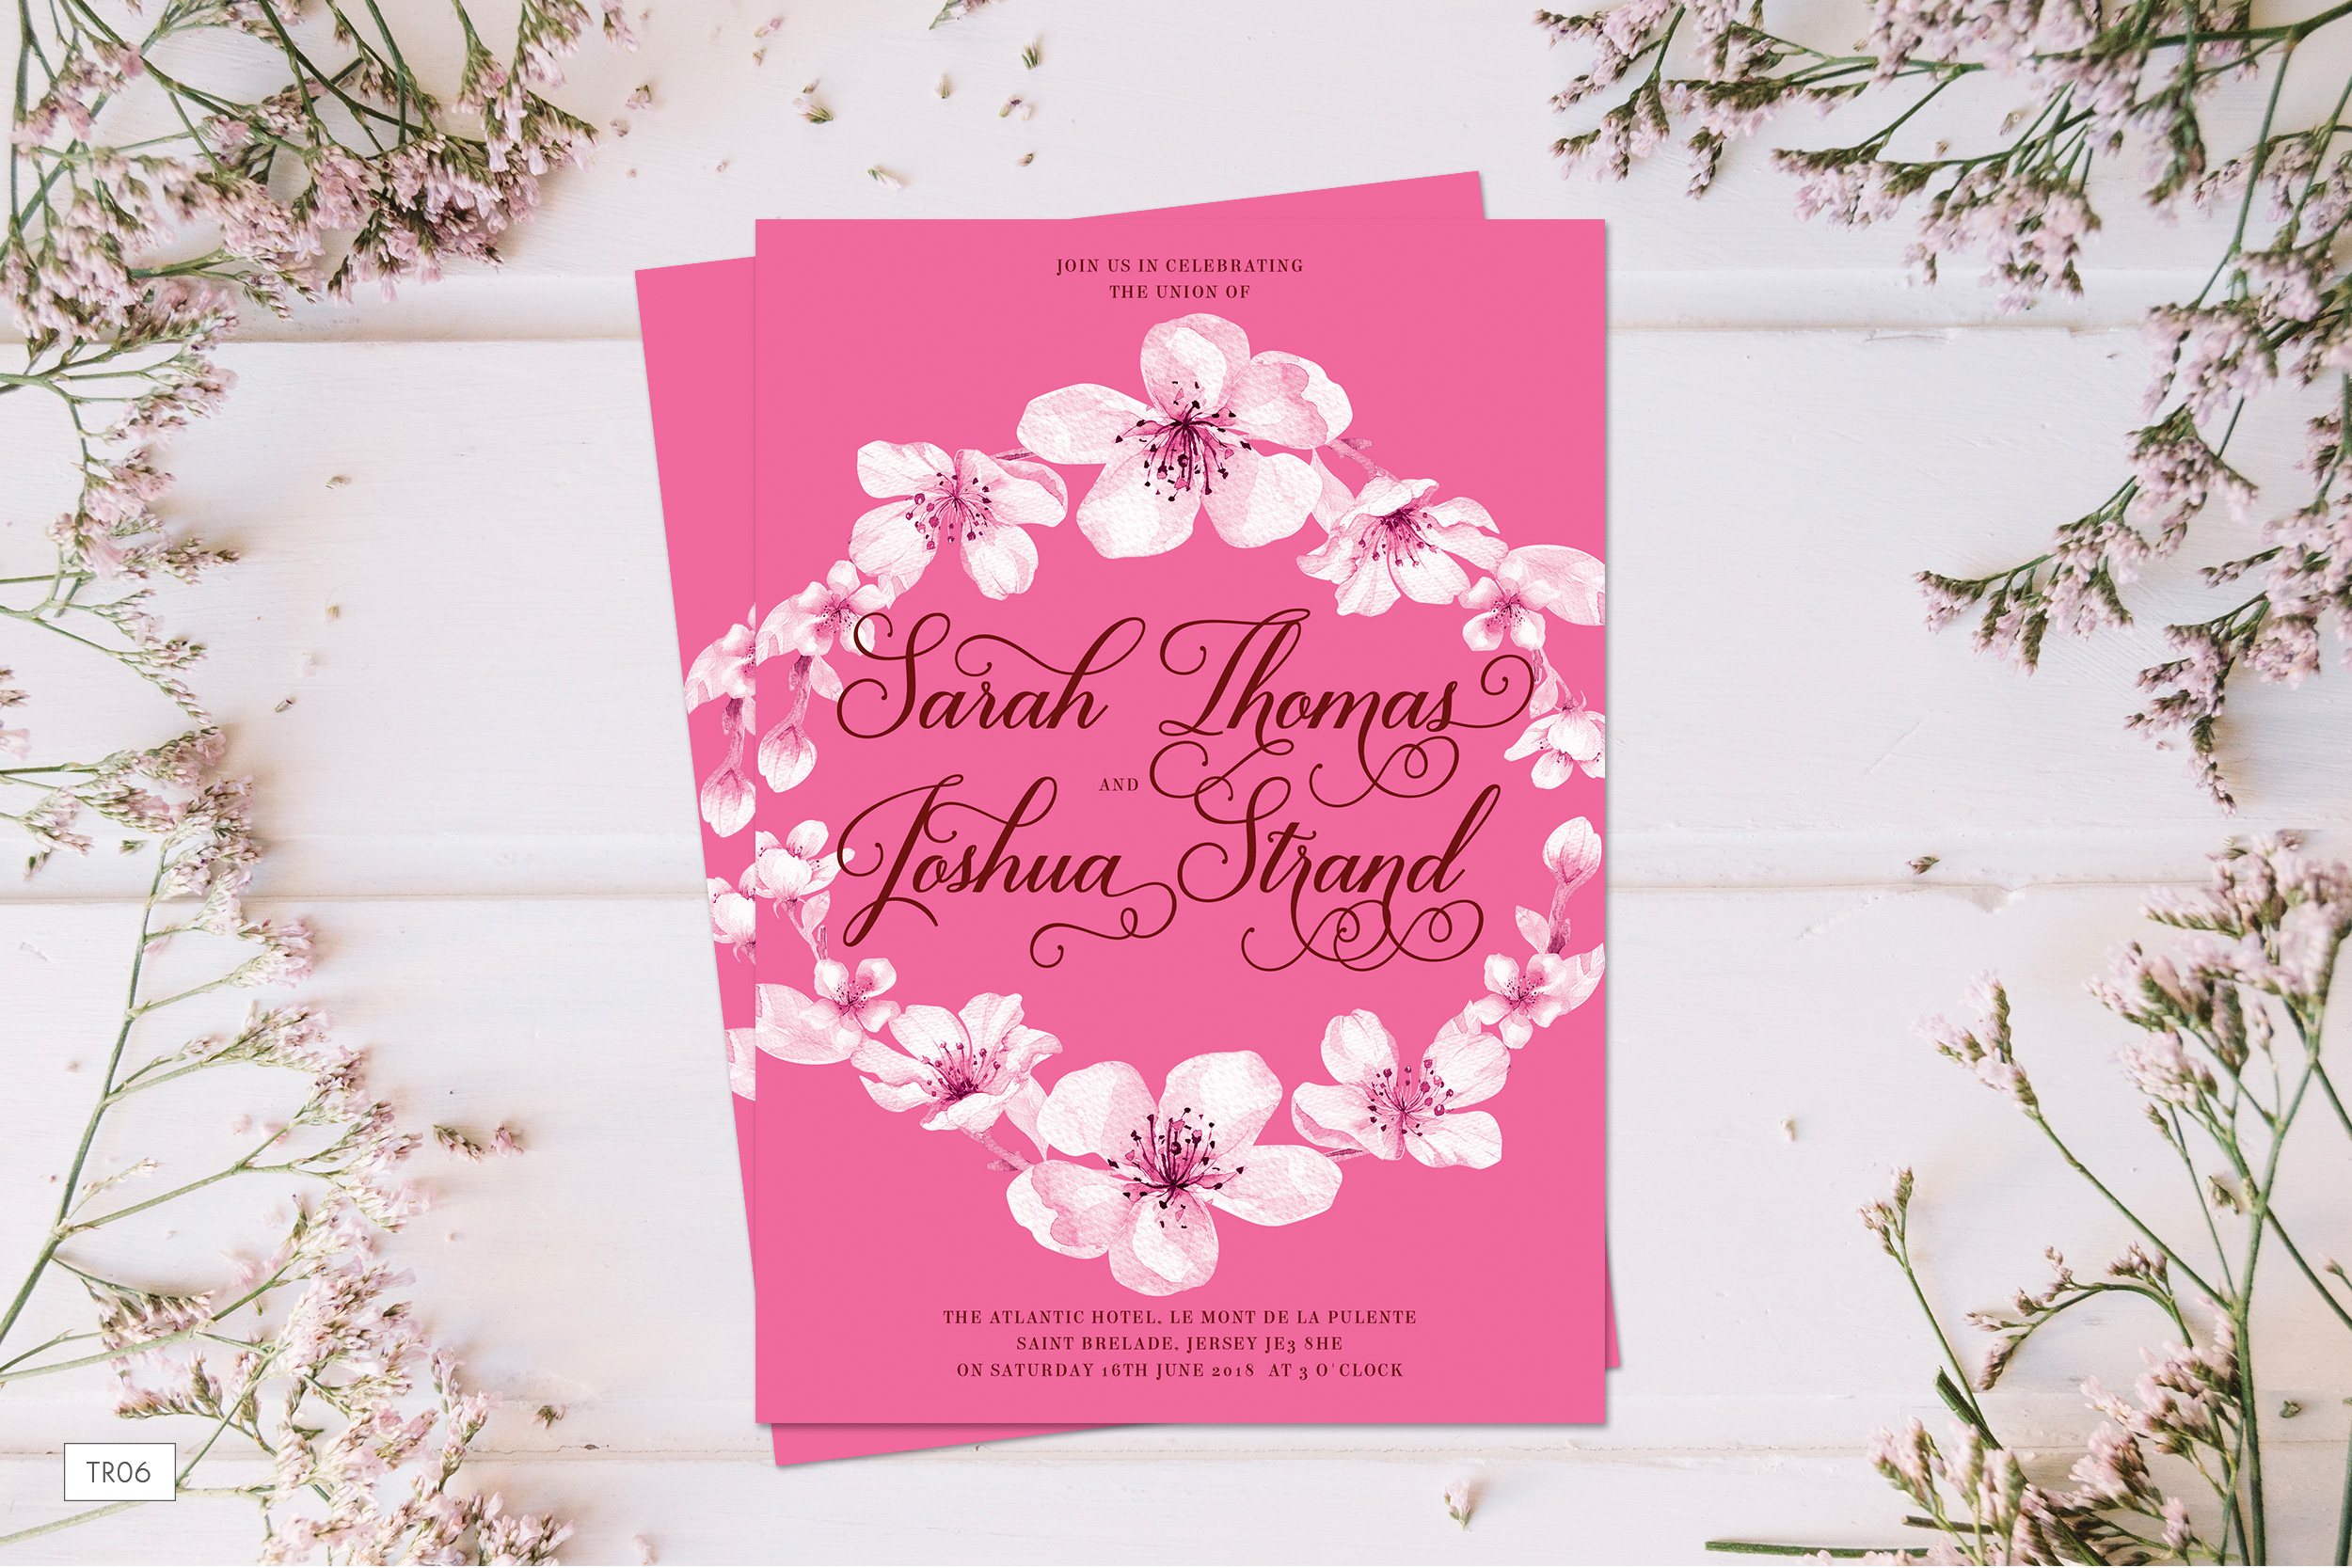 tr05-tropical-orchids-wedding-invitation-pink.jpg